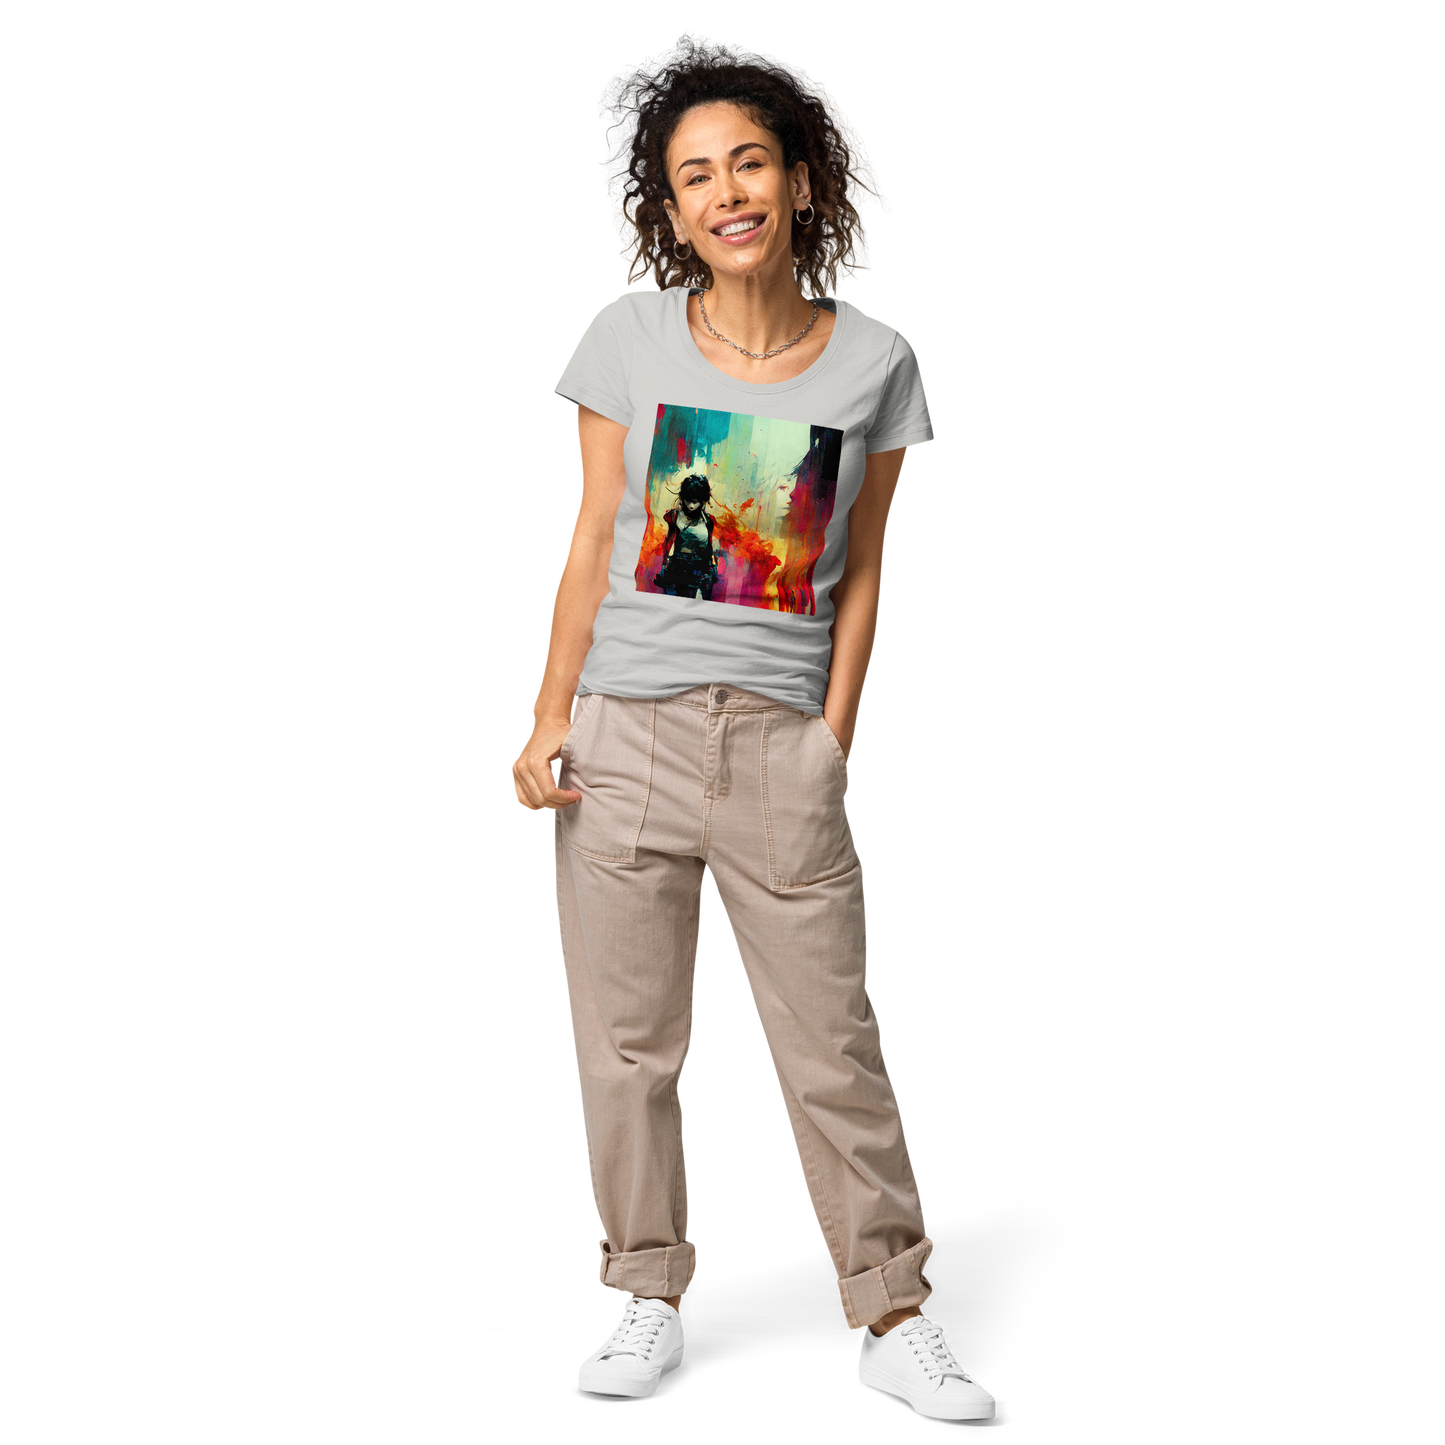 Female Street Ninja - Women’s Organic T-Shirt